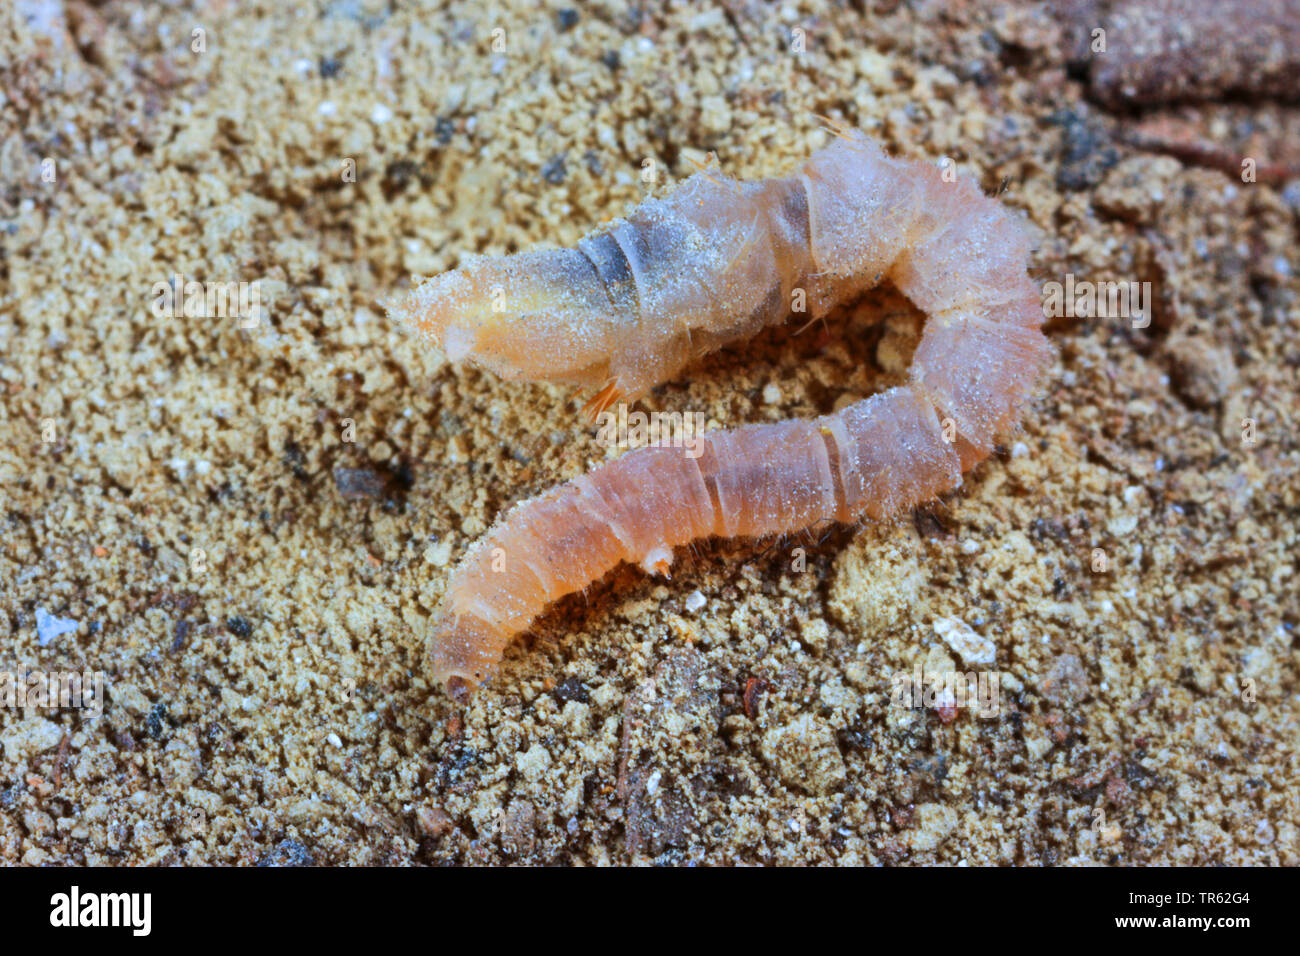 Vermileonid (Vermileo vermileo), larve, Allemagne Banque D'Images